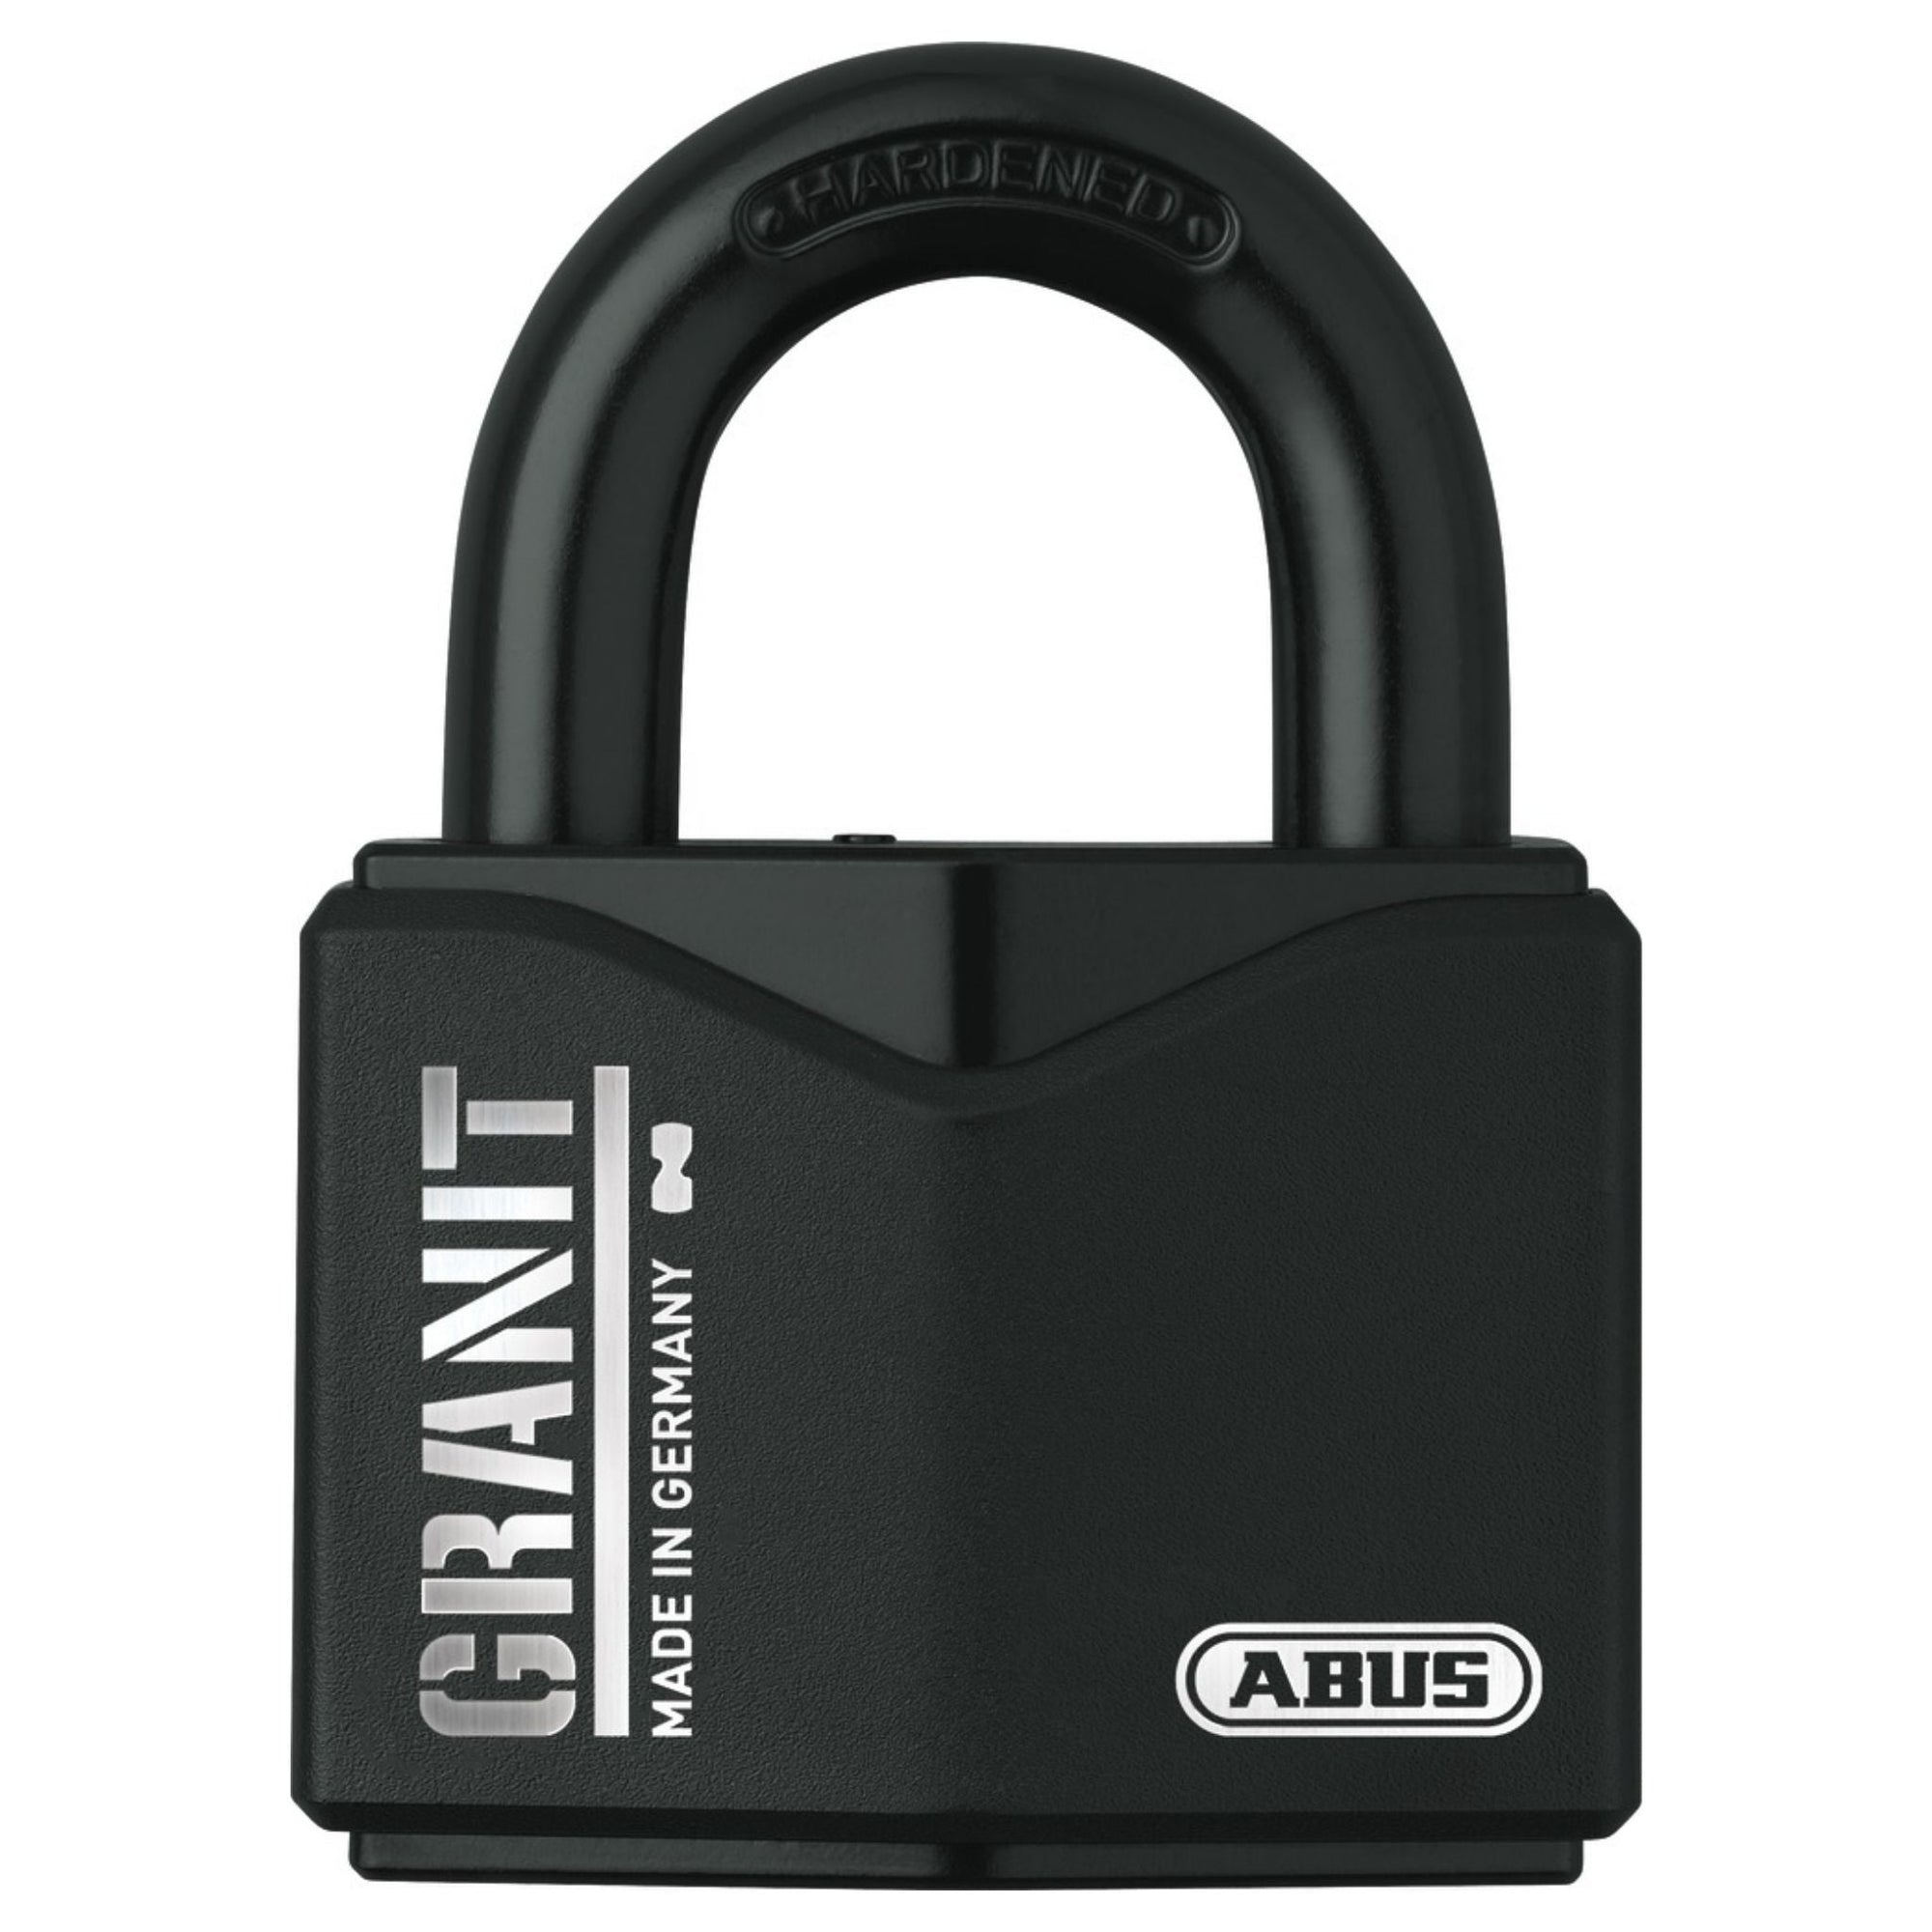 Abus 37/55 KA 5544653 Granit Lock Keyed Alike Black Granite Padlocks Matched to Existing Key# KA5544653 - The Lock Source